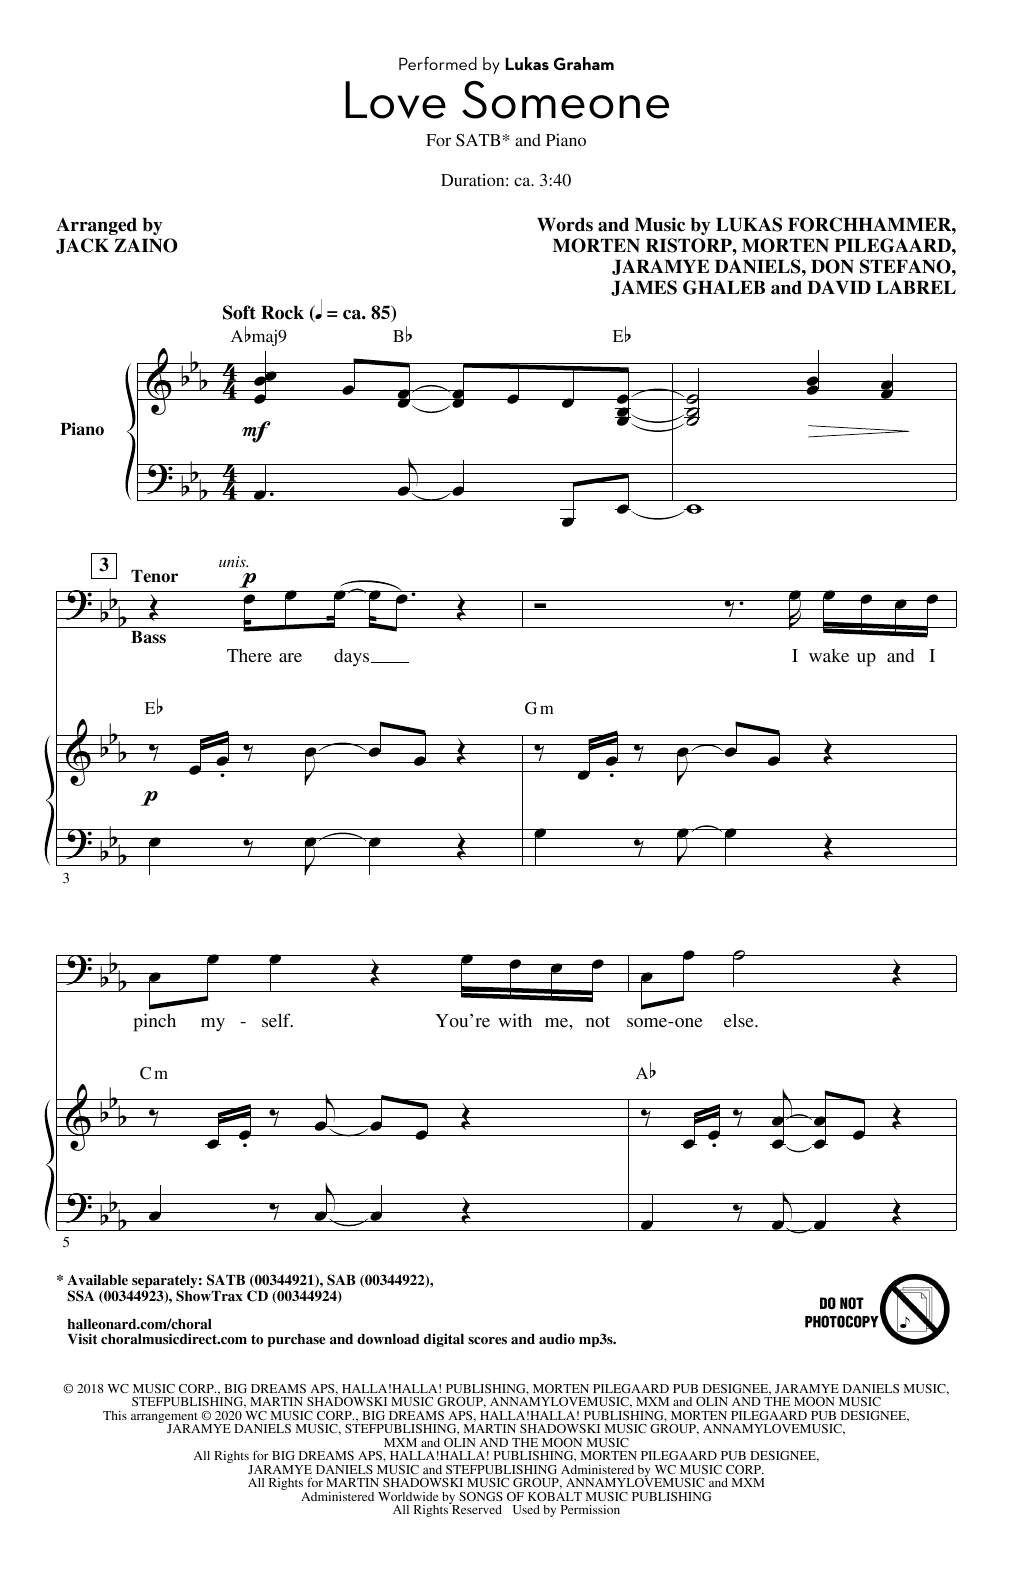 Lukas Graham Love Someone (arr. Jack Zaino) Sheet Music Notes & Chords for SSA Choir - Download or Print PDF